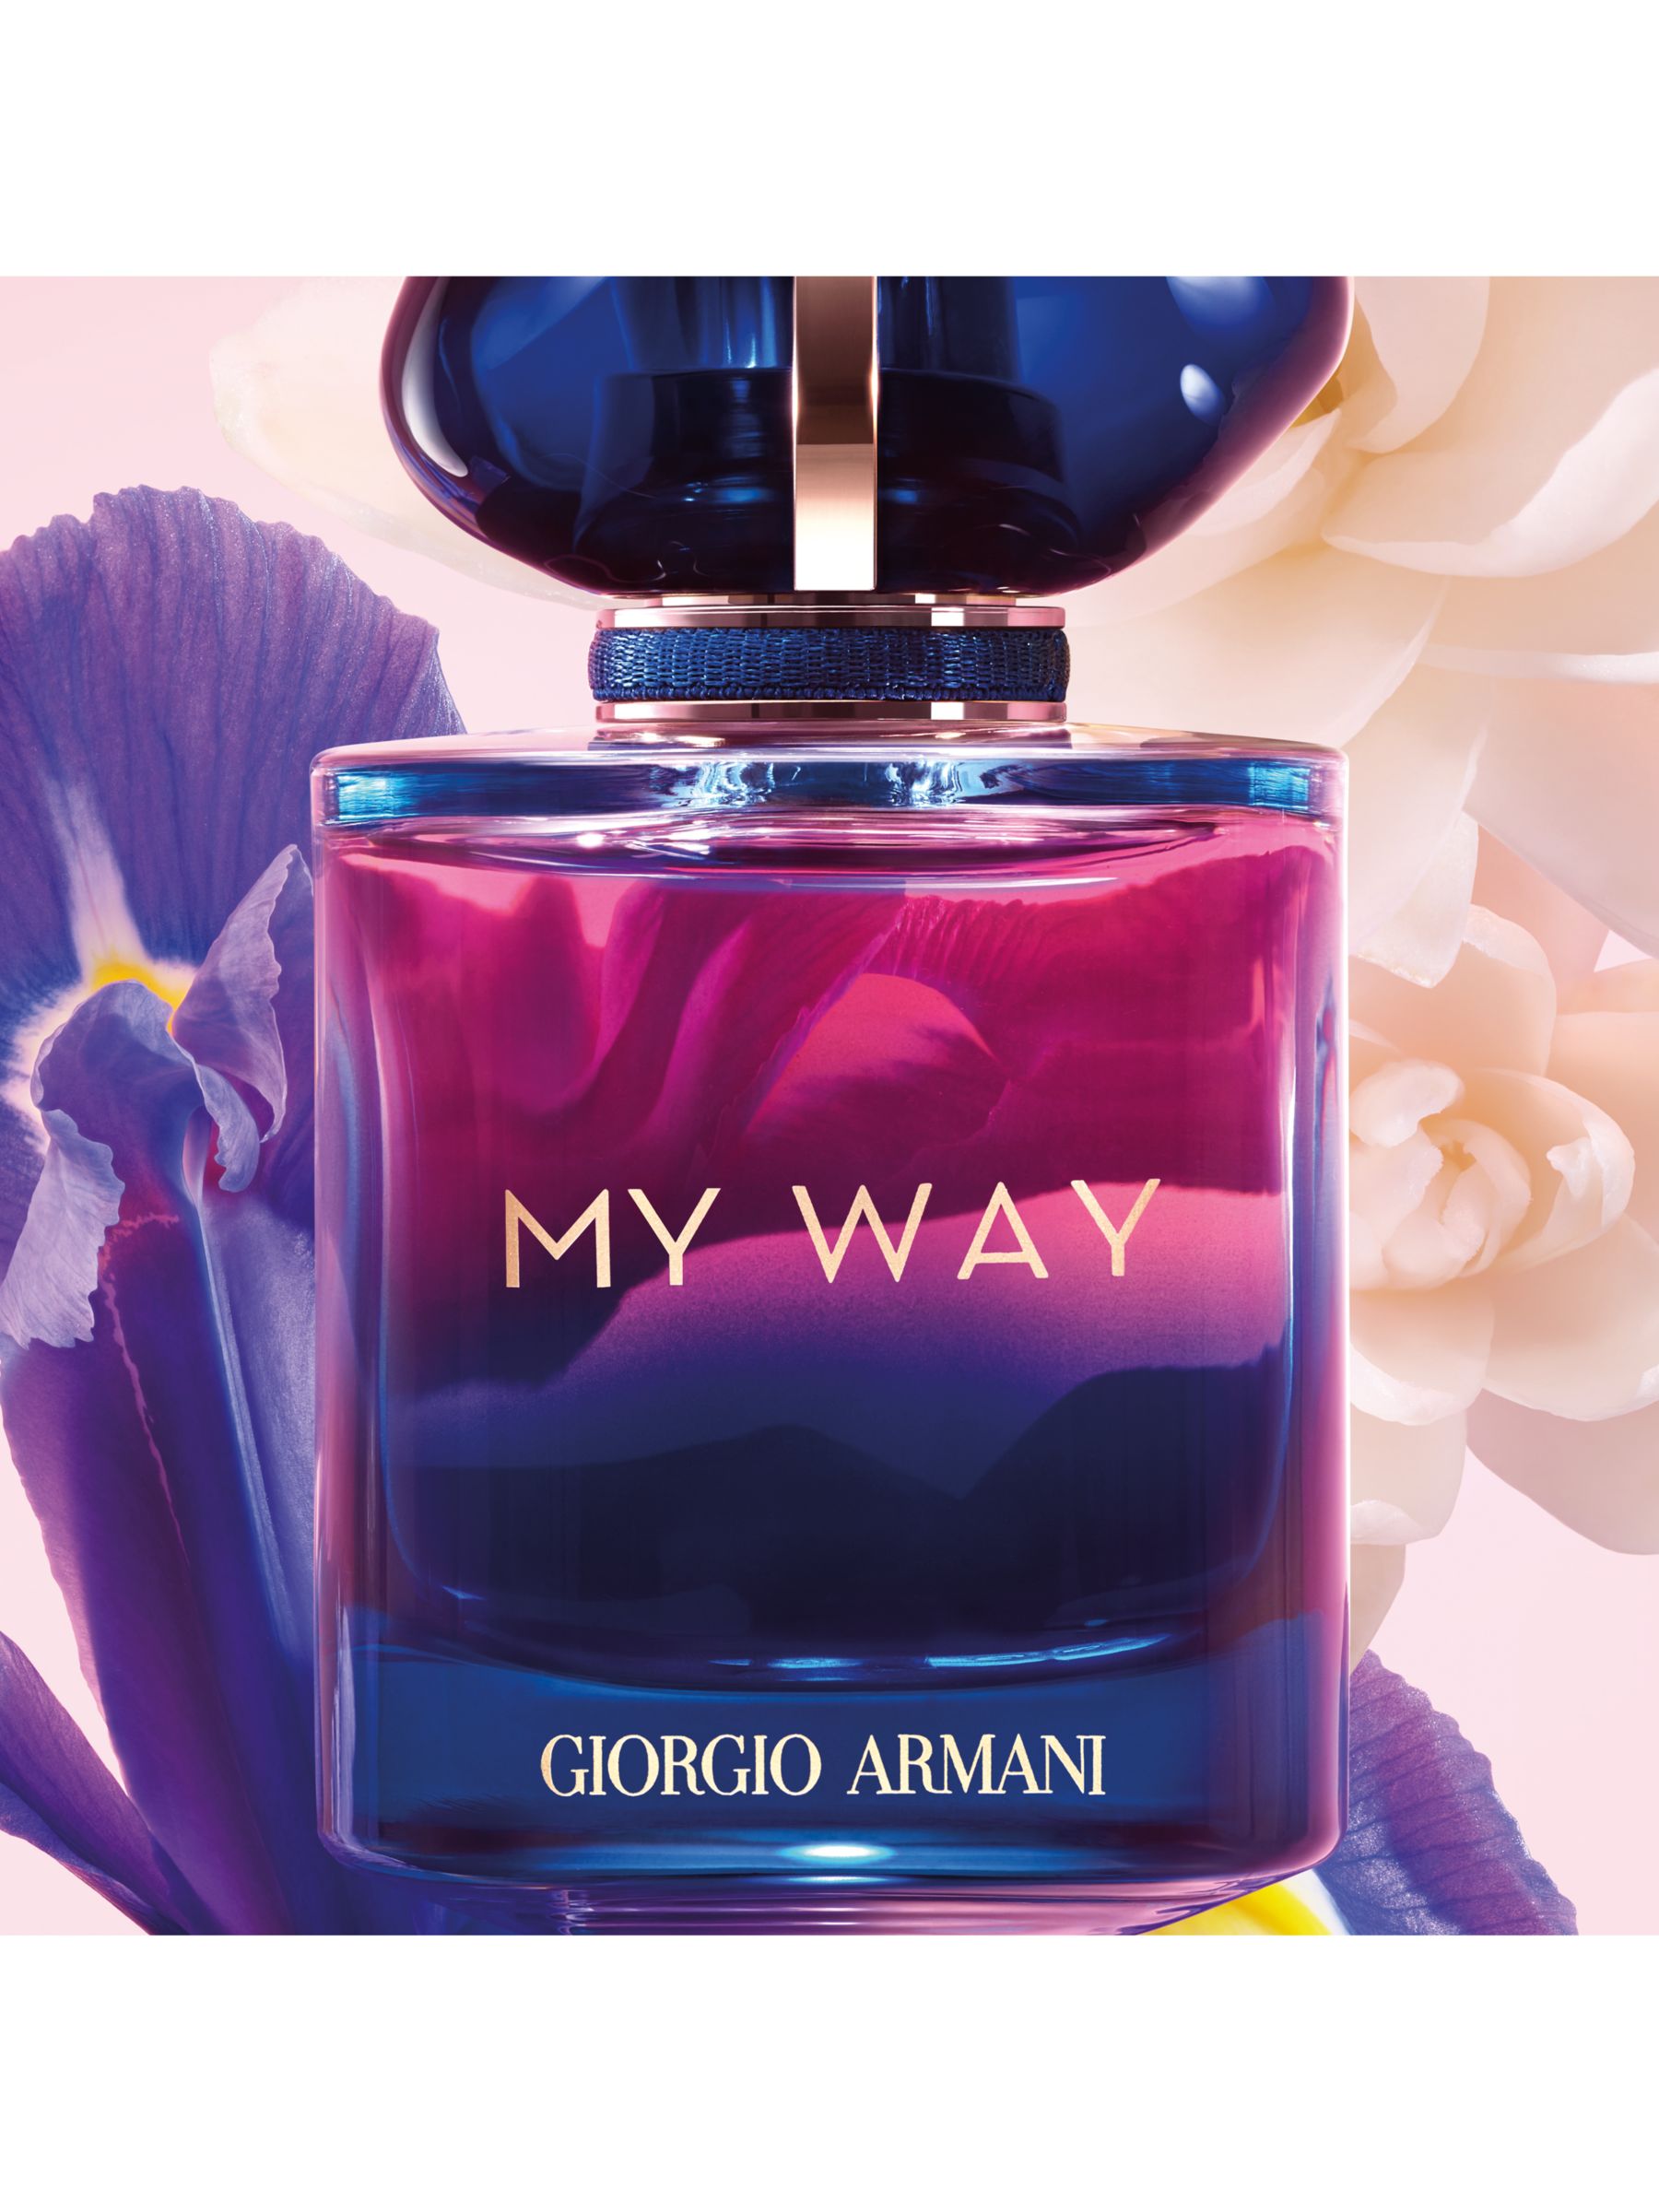 Giorgio Armani My Way Le Parfum Refill, 100ml 4